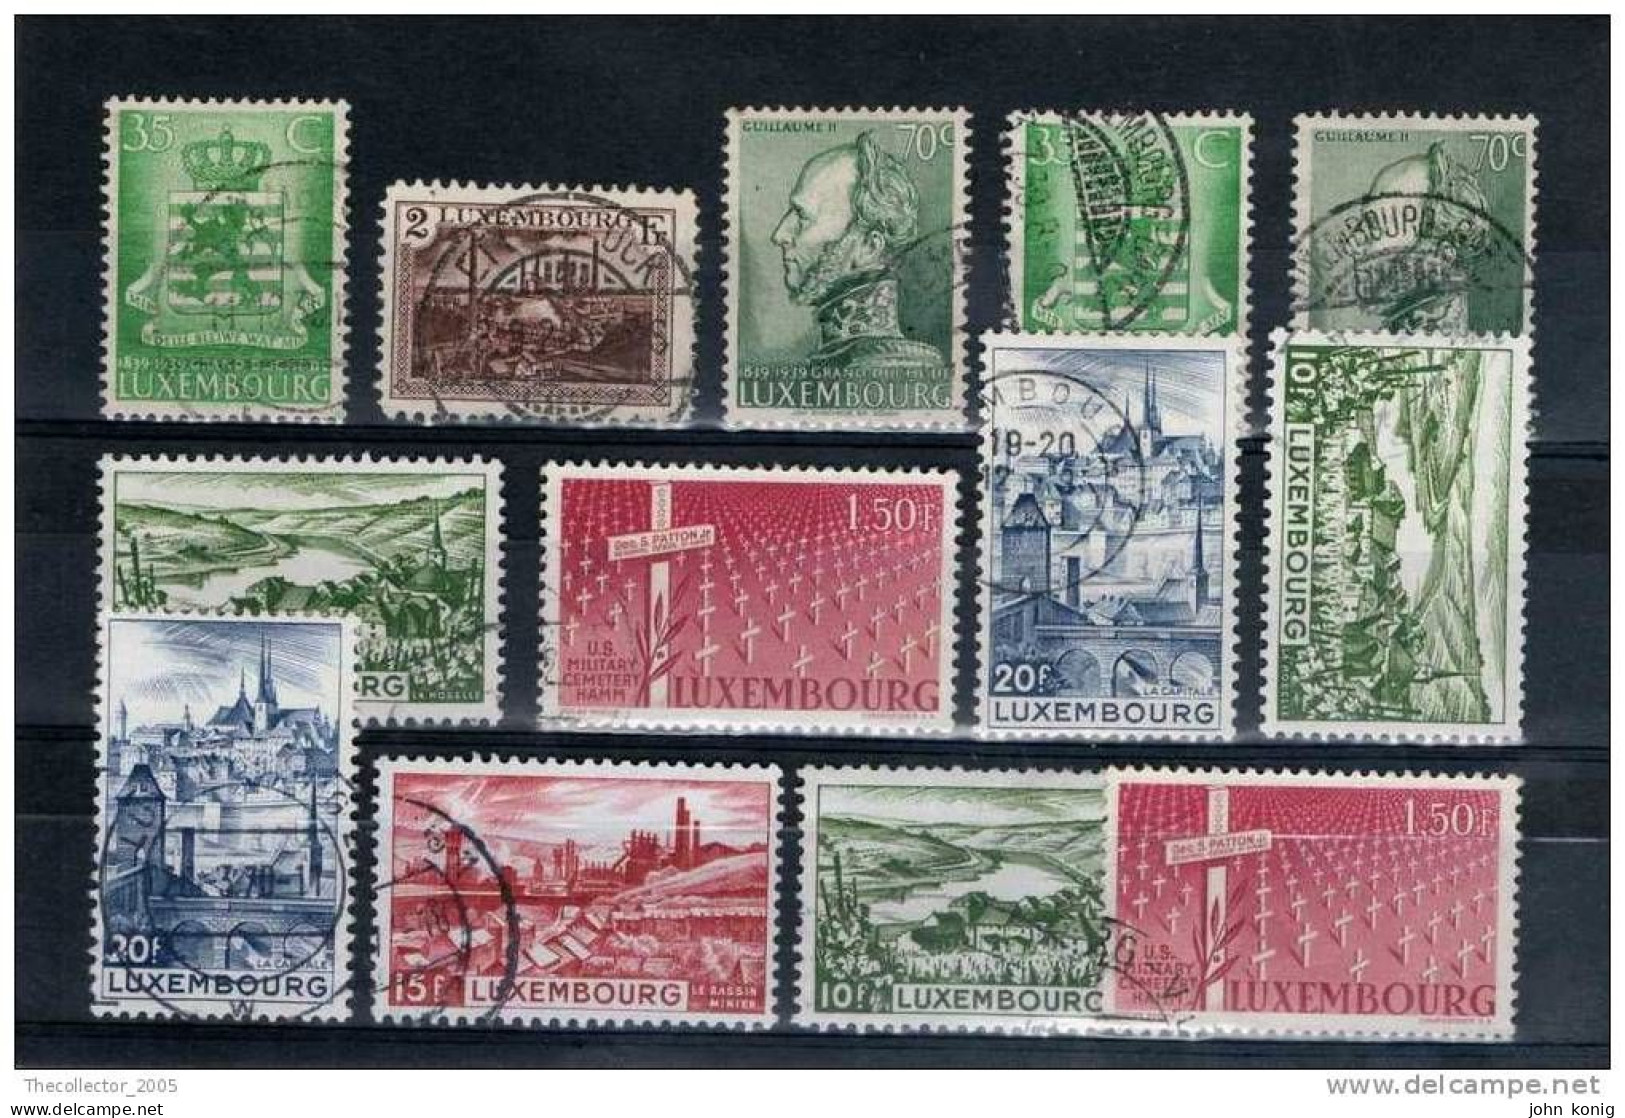 LUSSEMBURGO - LUXEMBOURG - Lotto Francobolli Usati - Stamps Lot Used - Colecciones